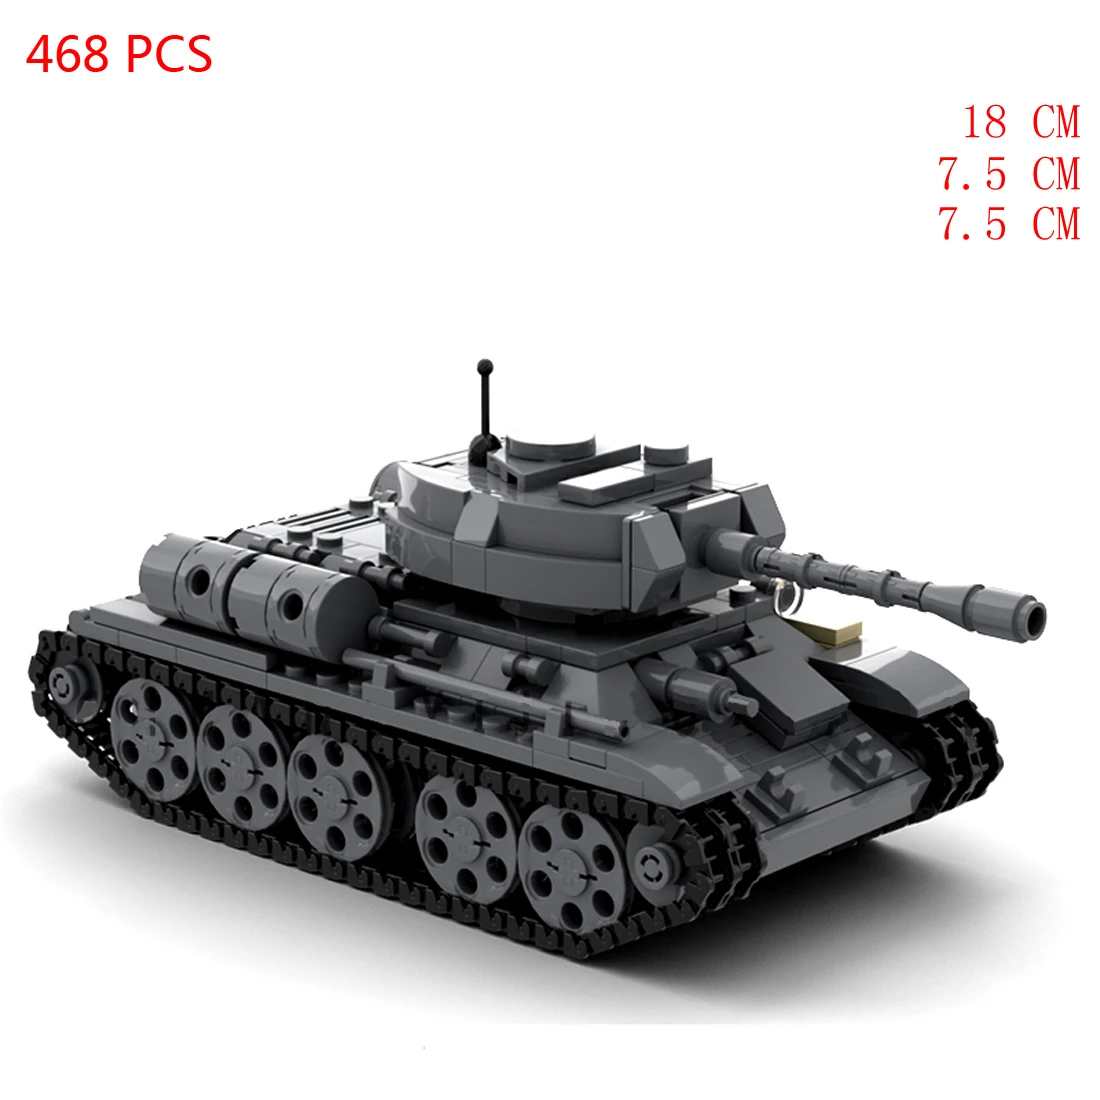 Buildarmy WW2 Soviet T34/76 Medium Tank Construction Toy Building Brick Kit 